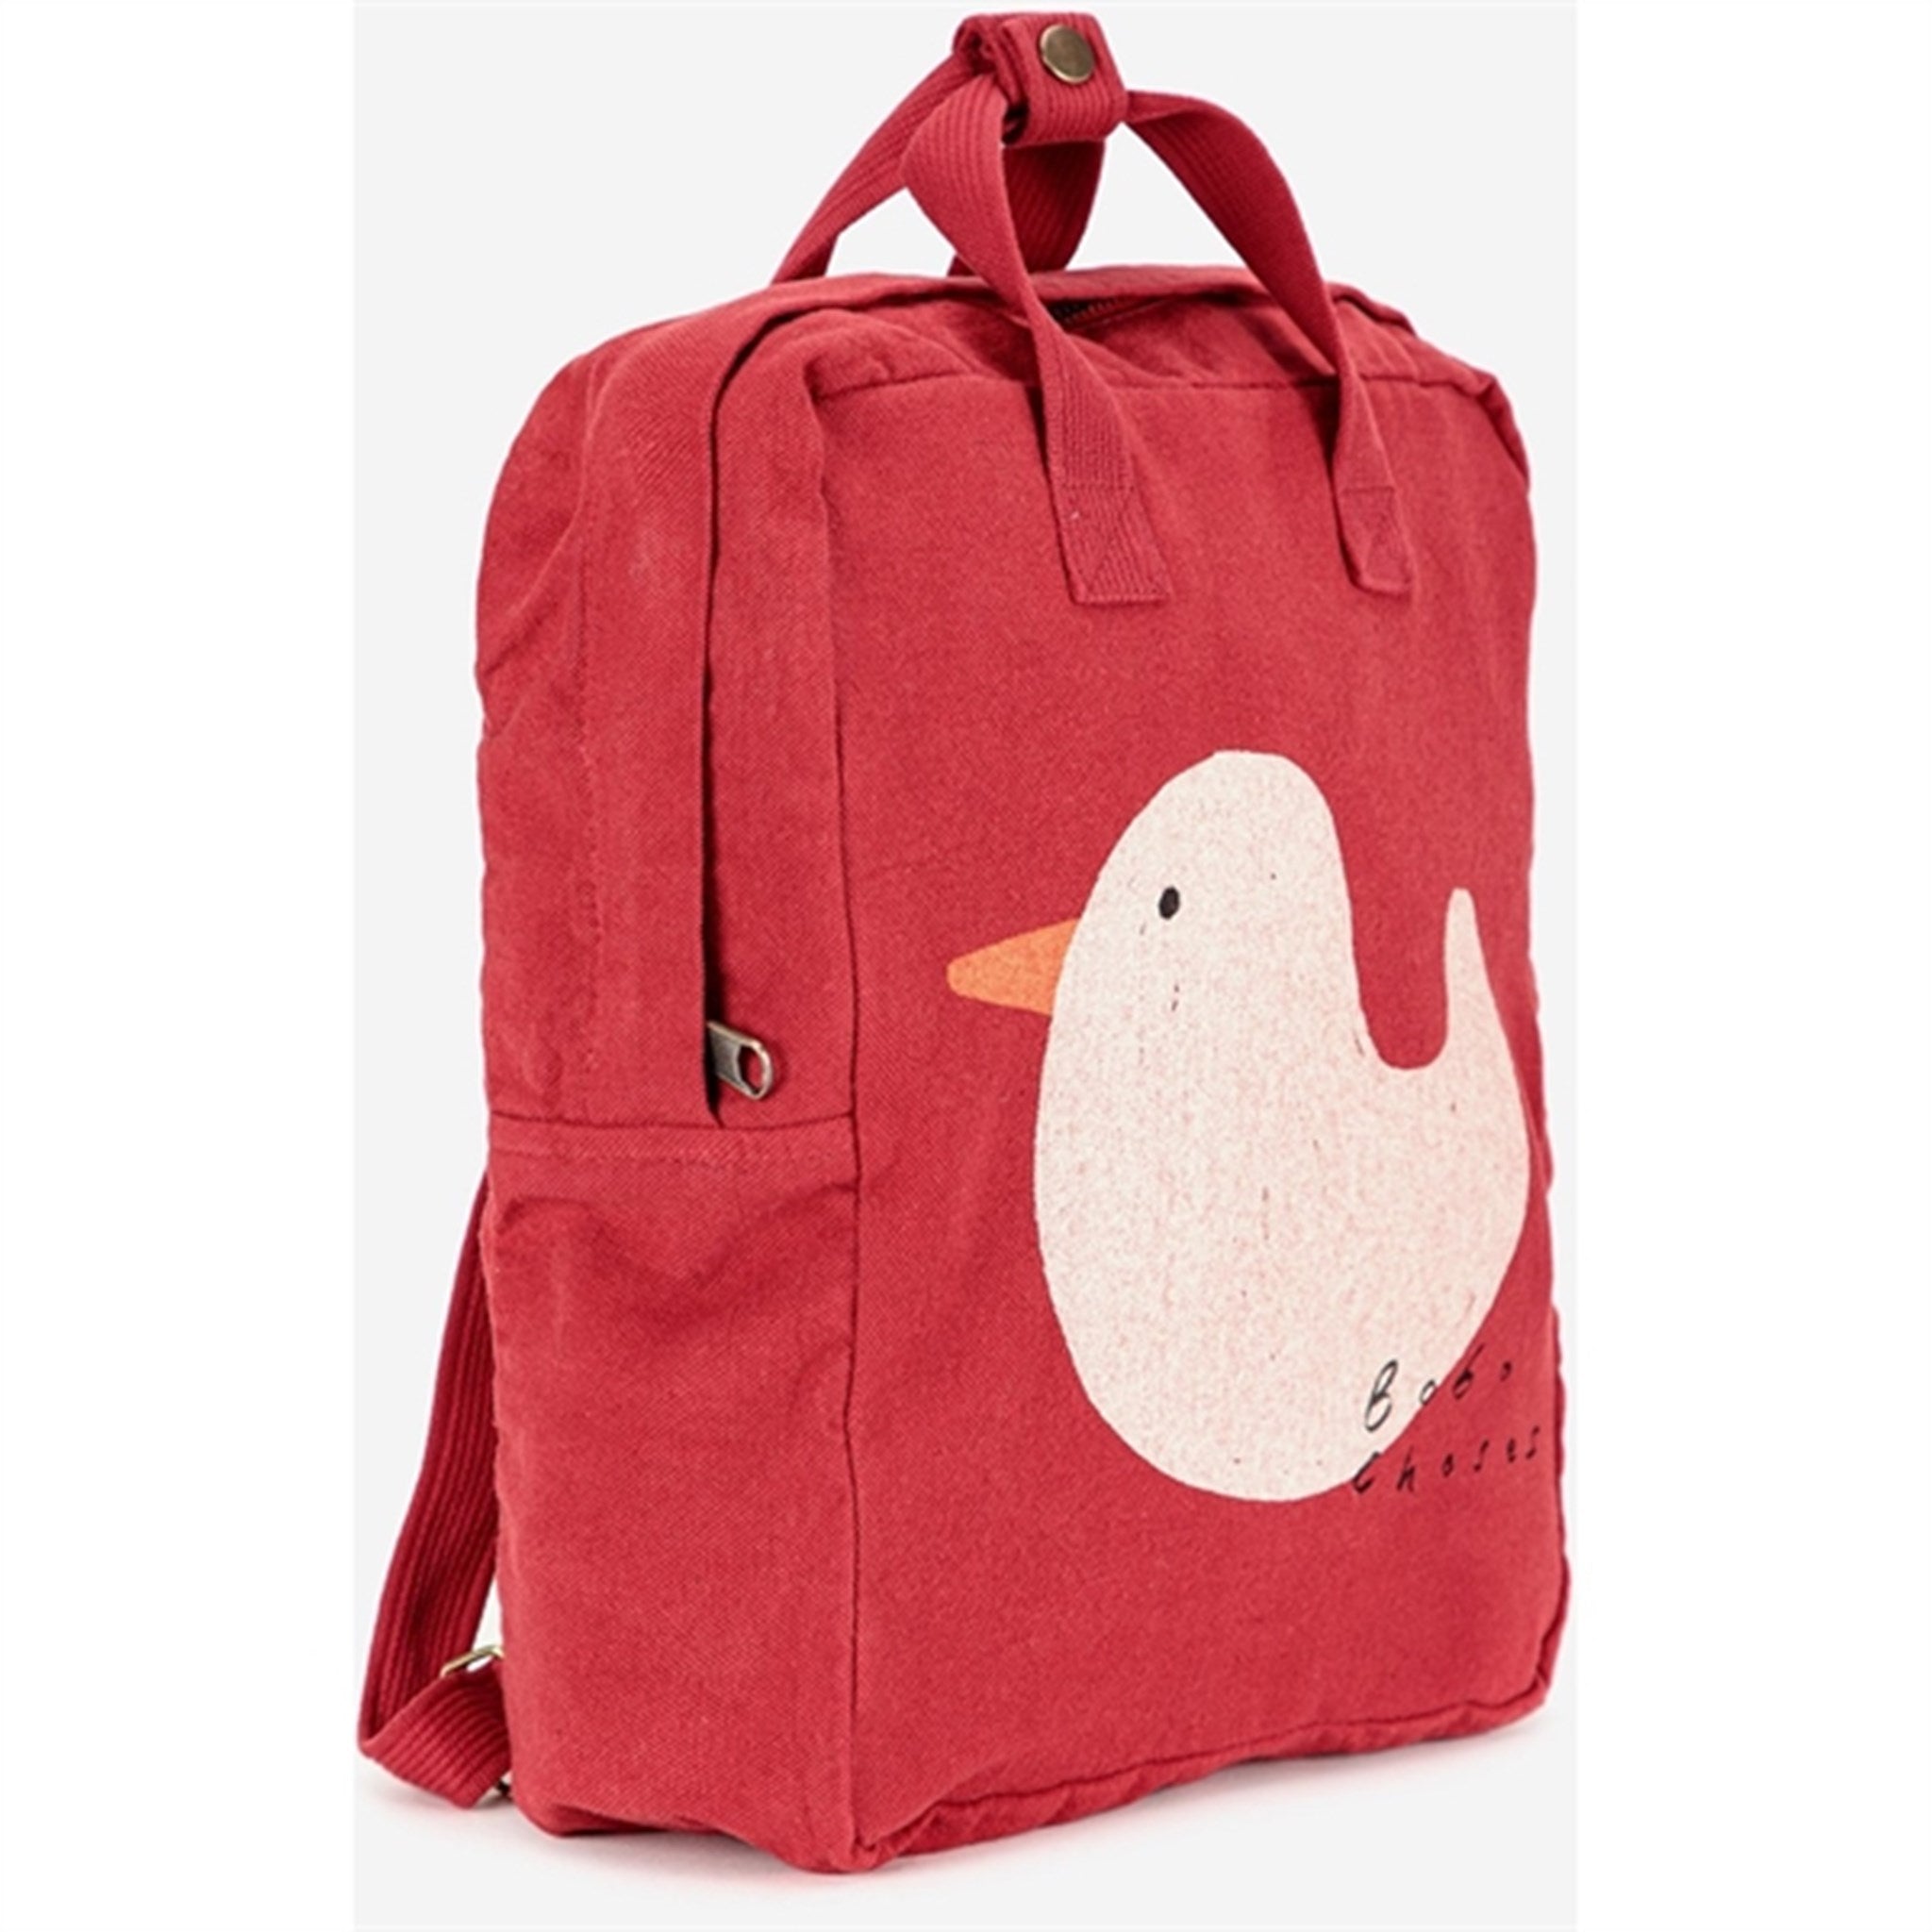 Bobo Choses Burgundy Red Rubber Duck Schoolbag 3